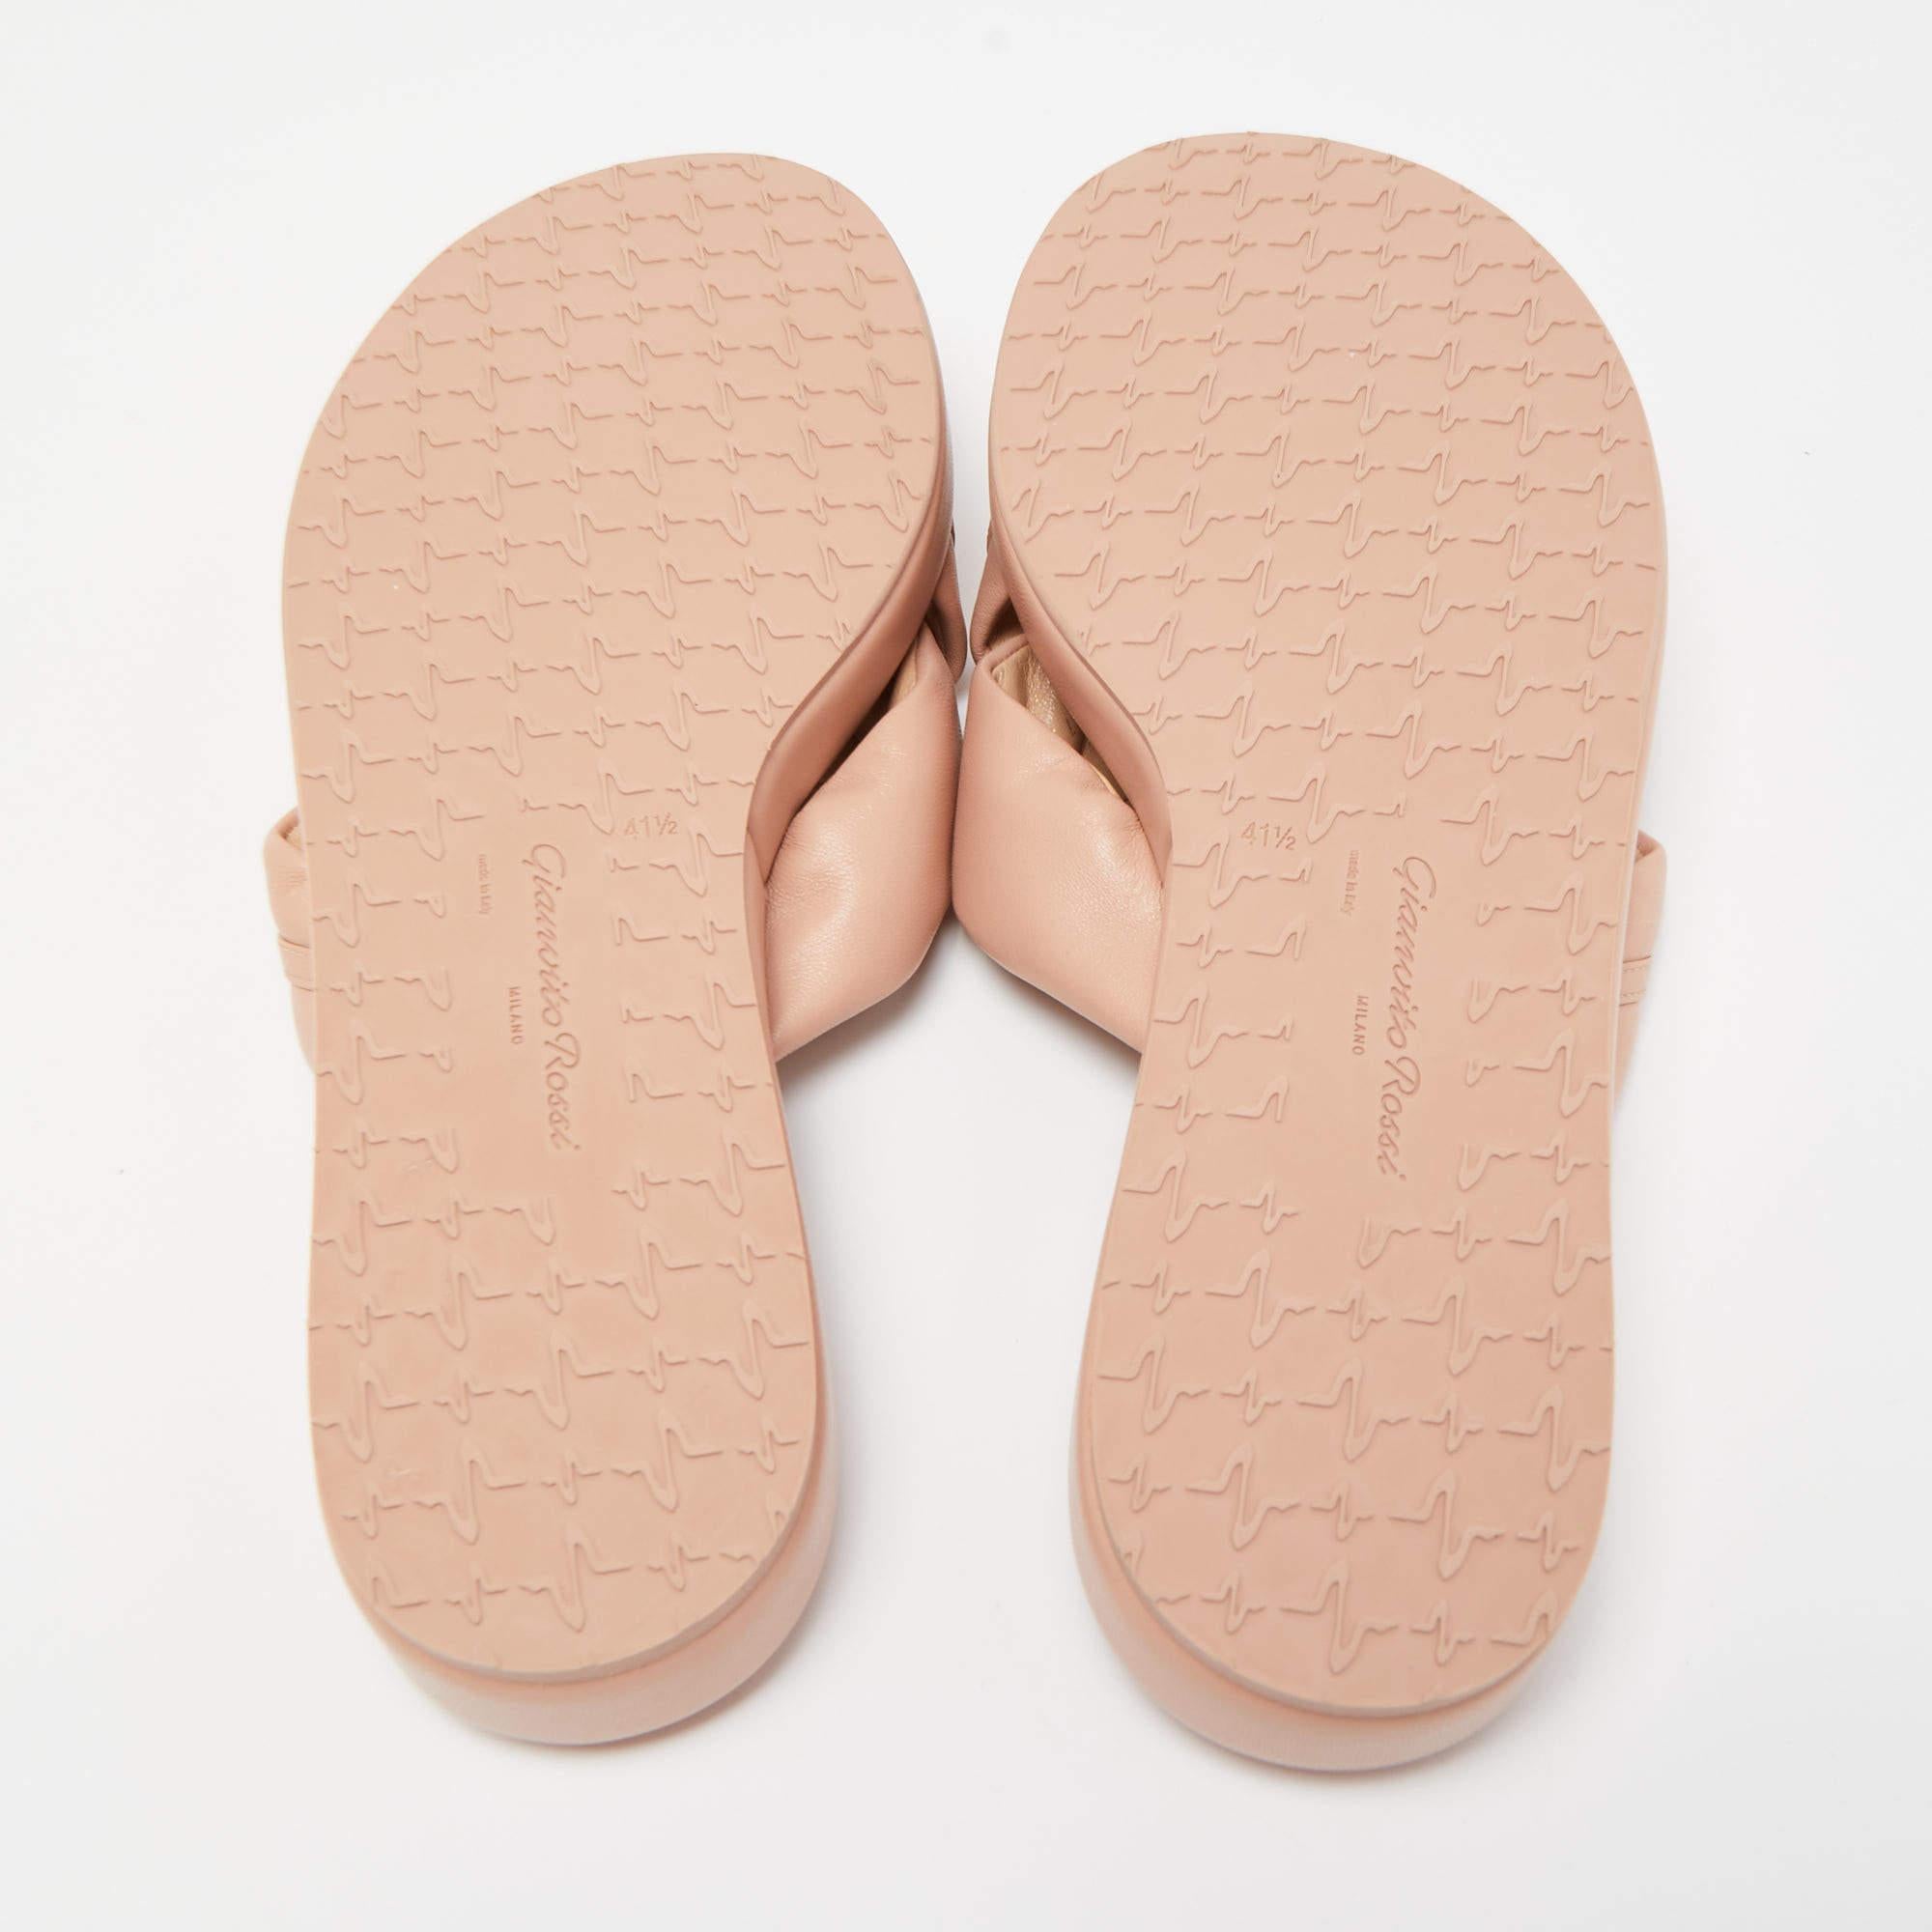 Gianvito Rossi Beige Leather Flatofrm Slide Sandals Size 41.5 3